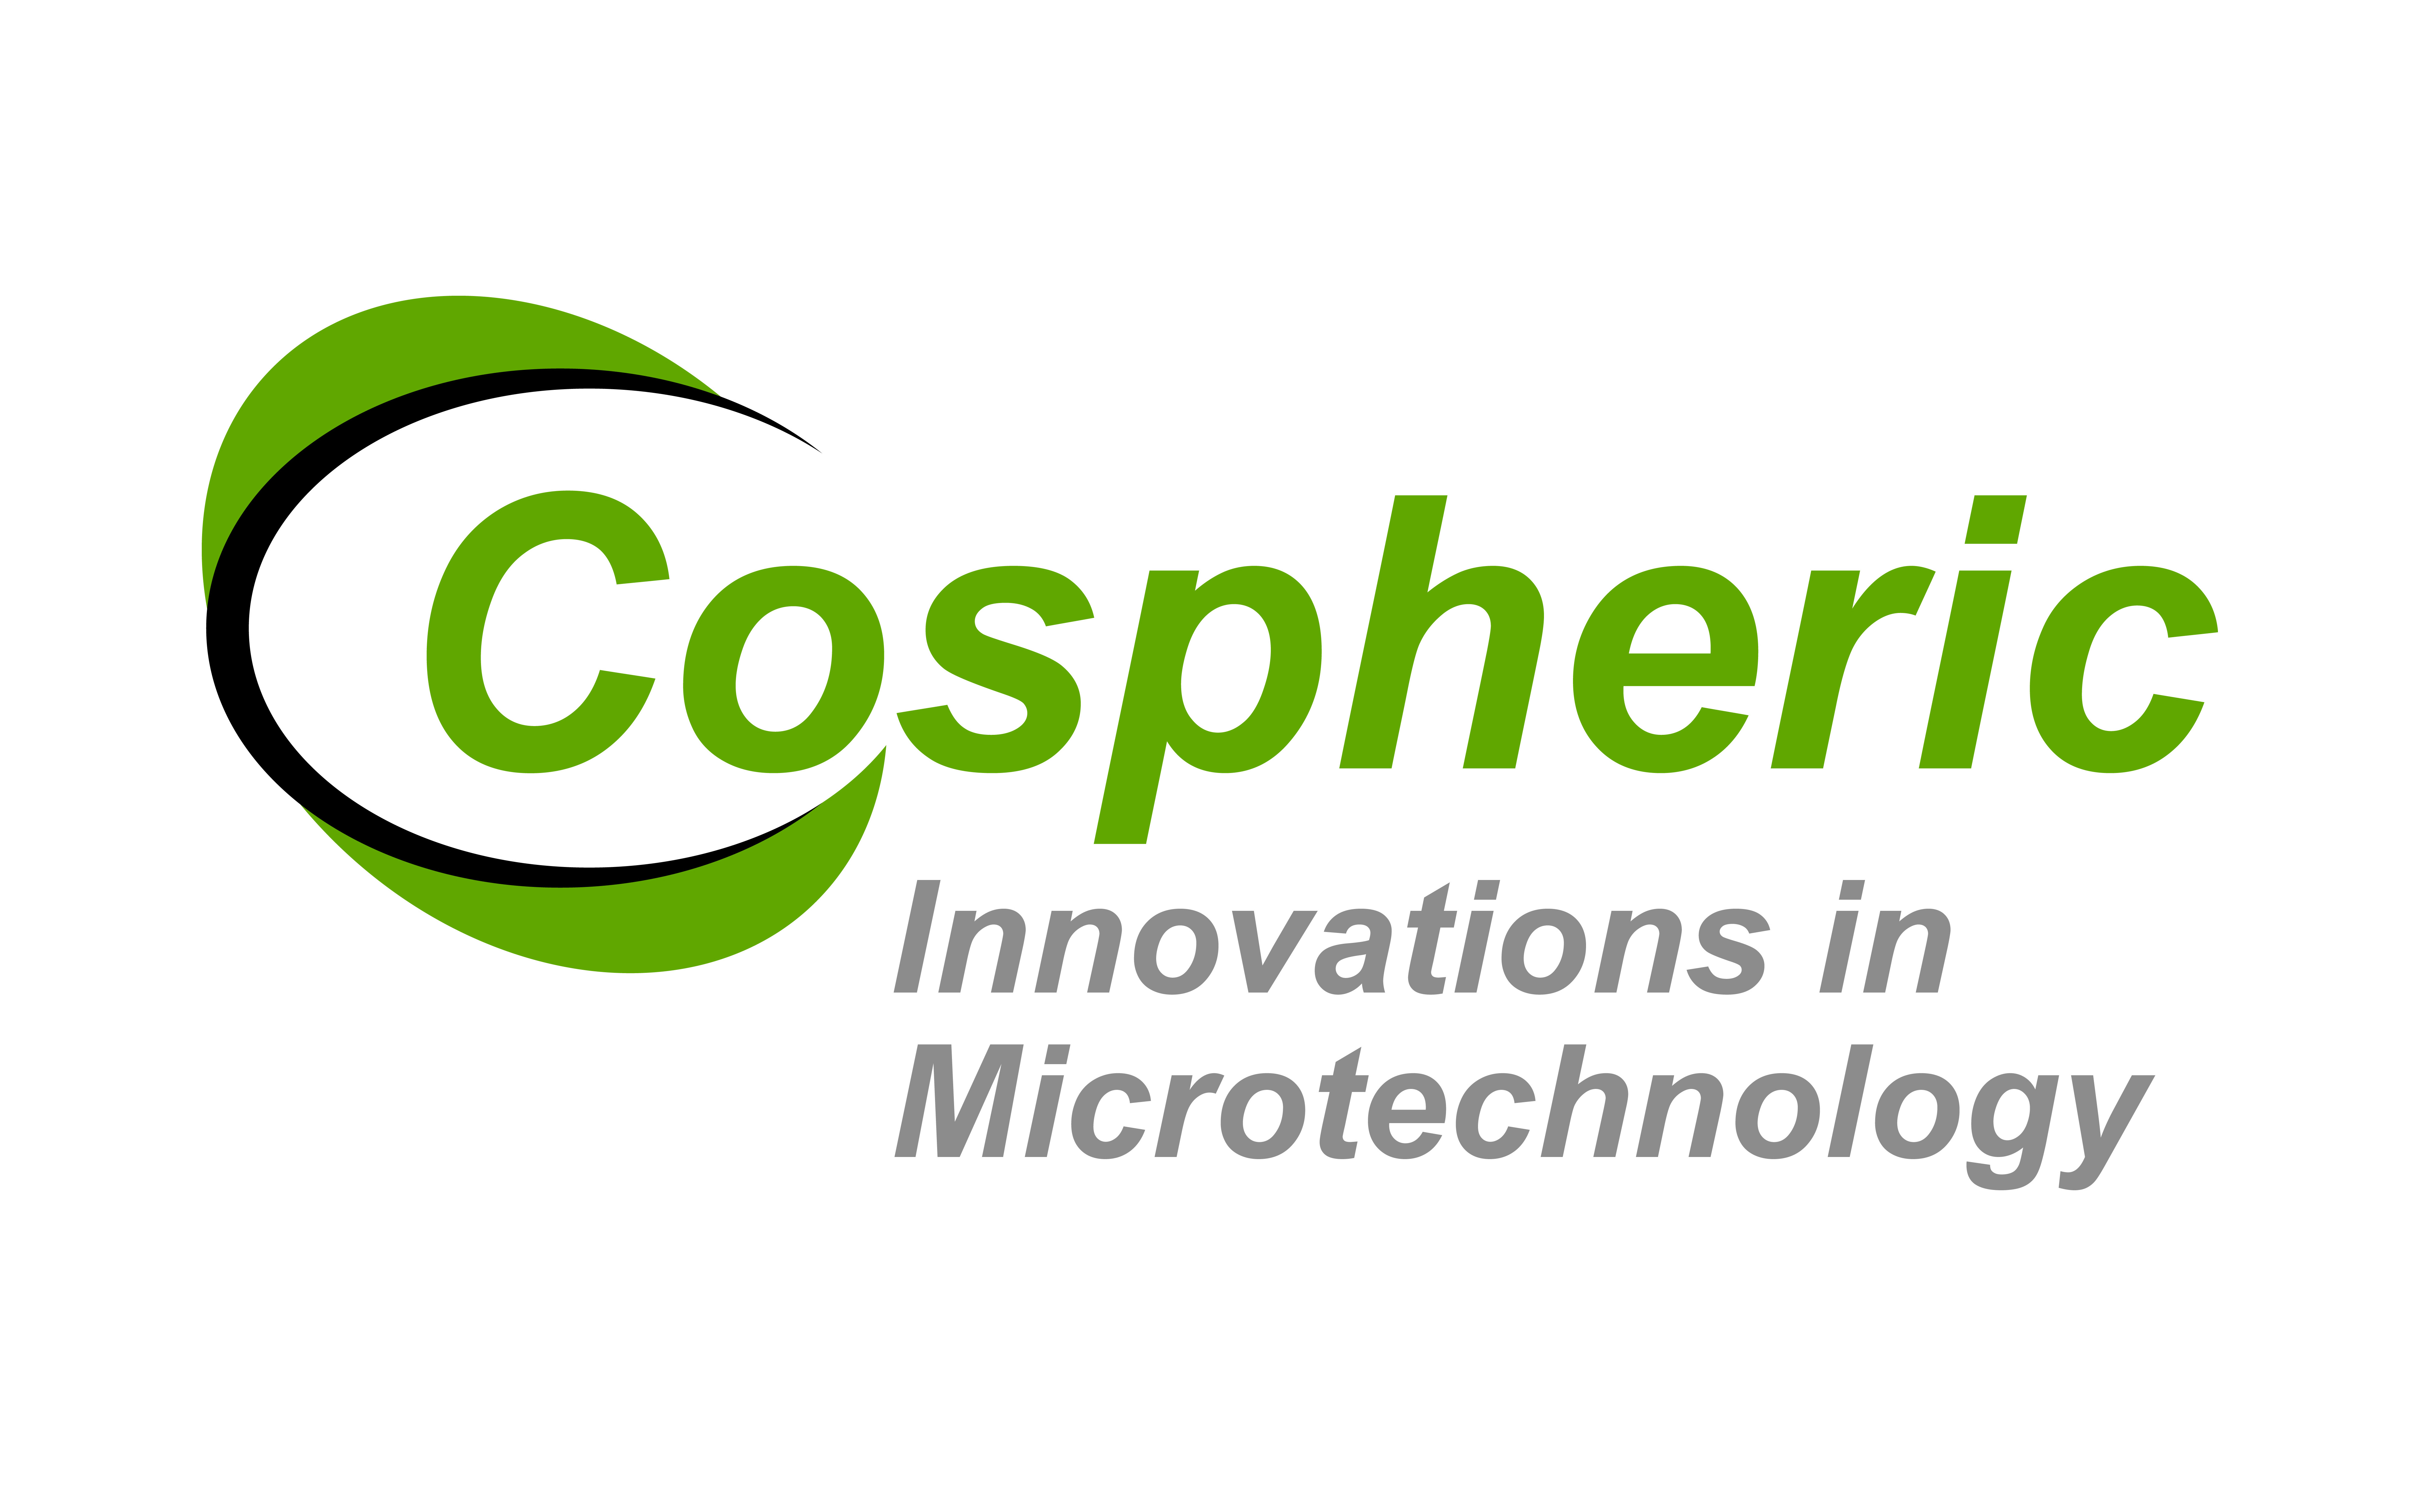 Cospheric LLC